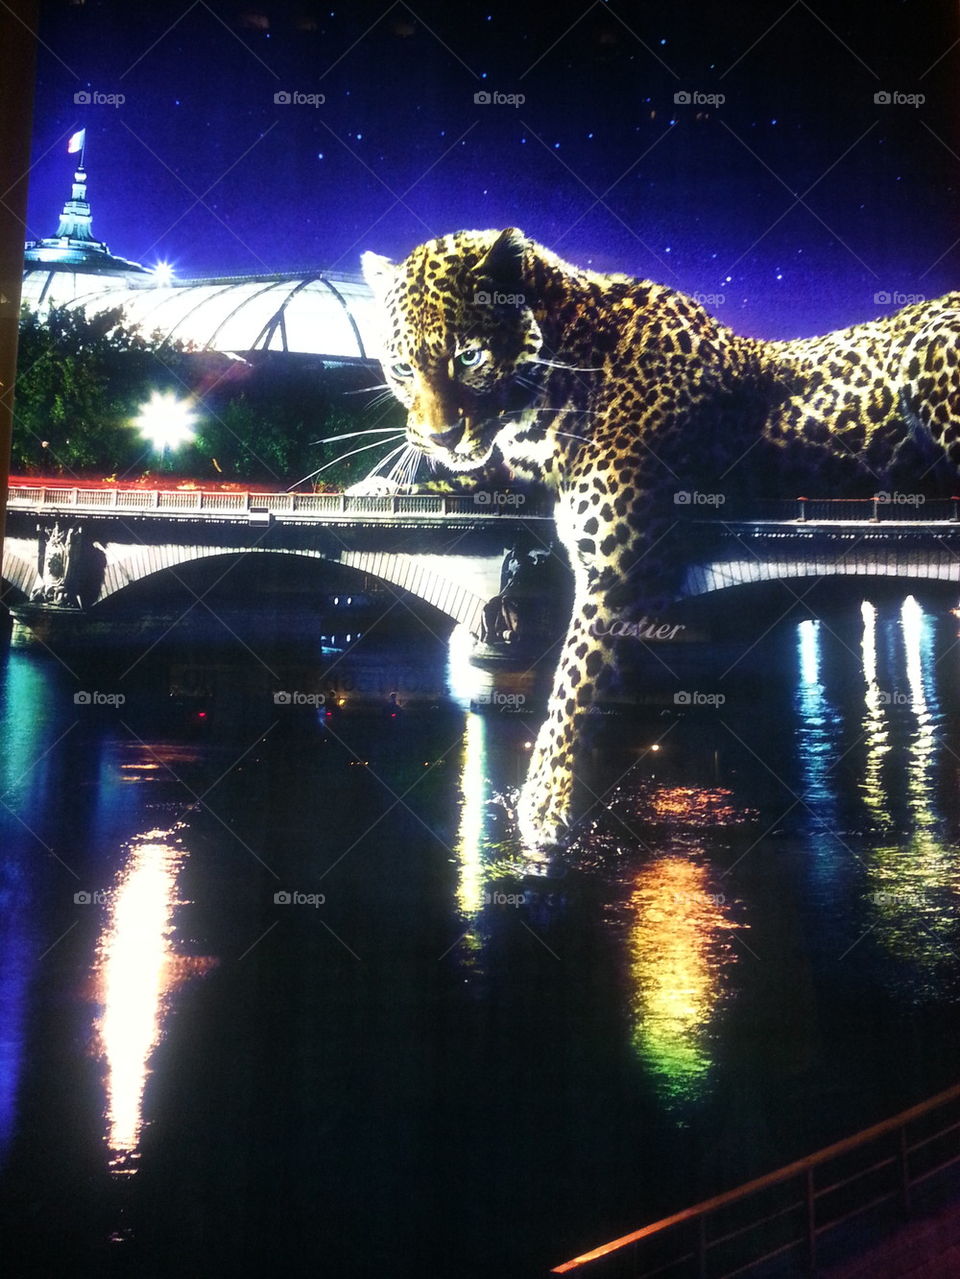 Cheetah in the Night